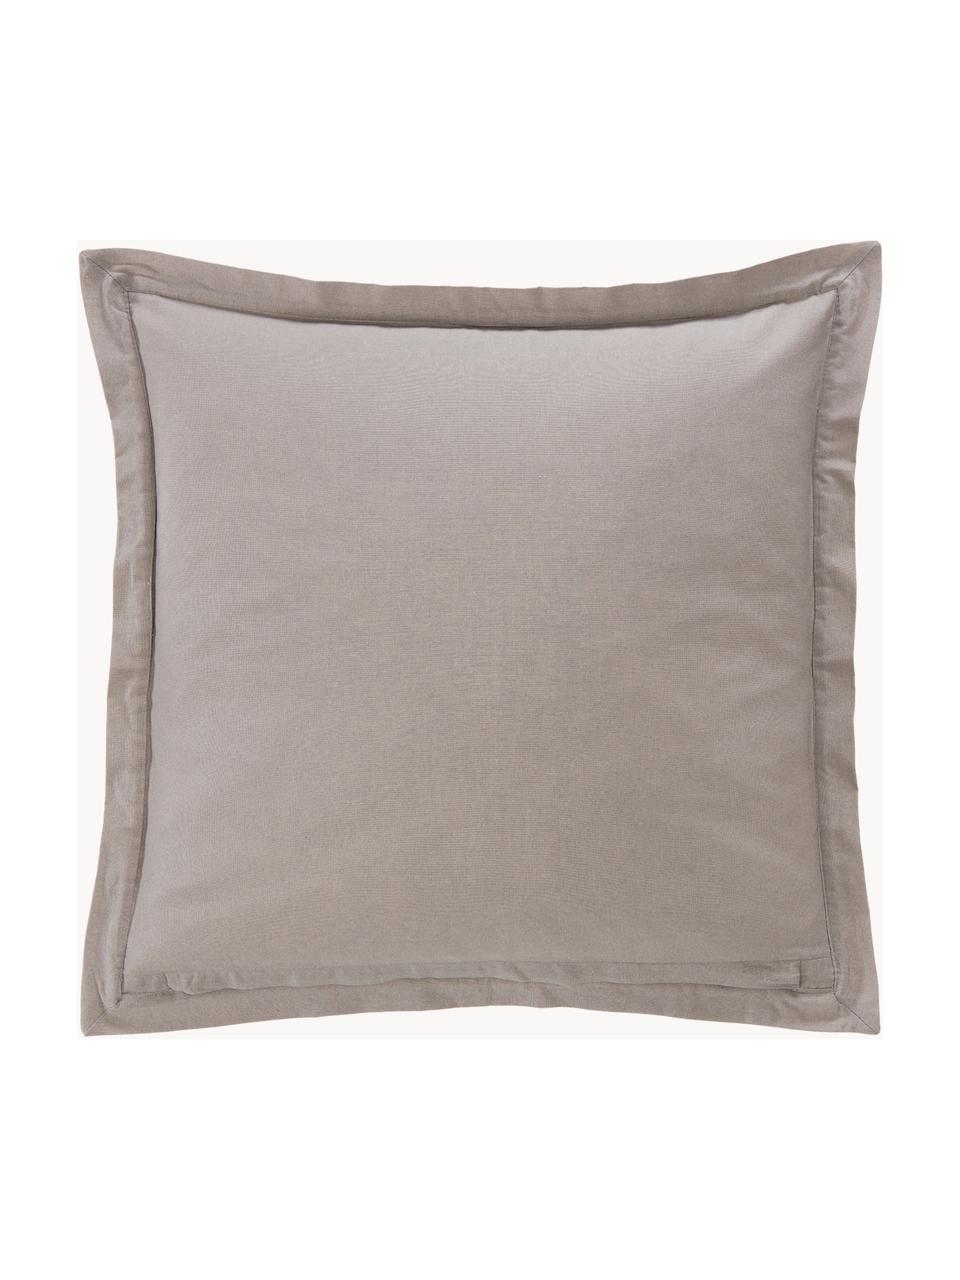 Poszewka na poduszkę Stripes, 100% bawełna, Szary, S 45 x D 45 cm